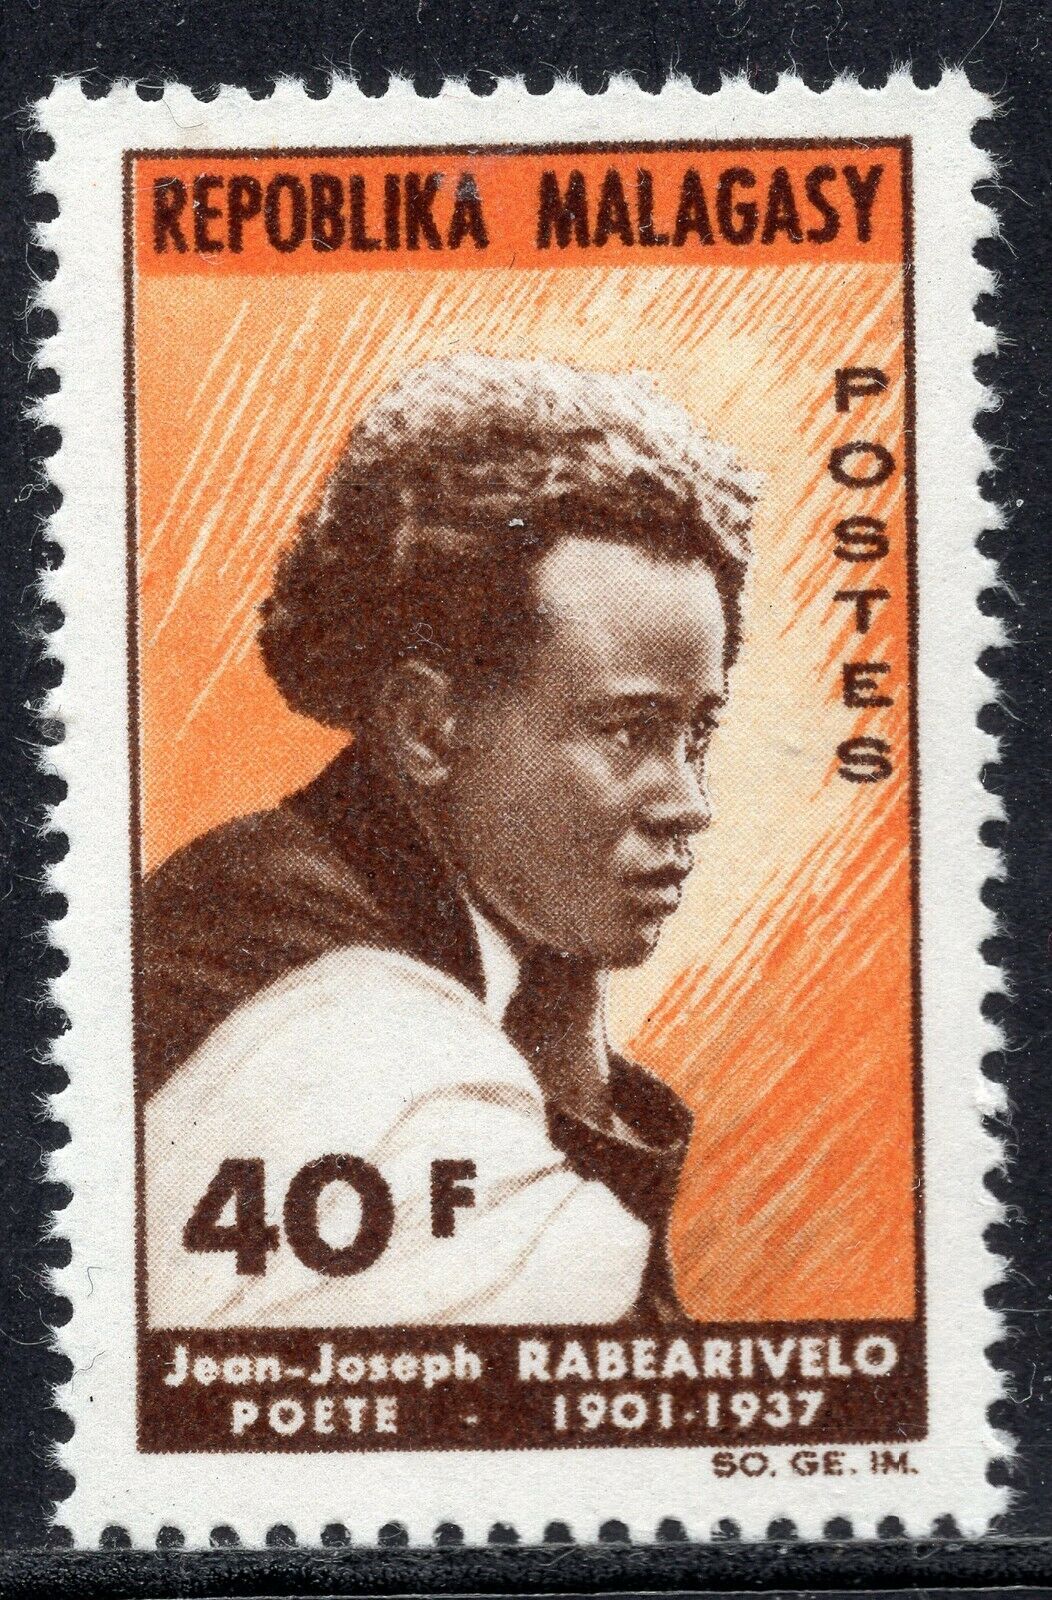 1246 - Madagascar - Malagasy 1965 - Jean Joseph Rabearivelo - Poet - Mnh Set